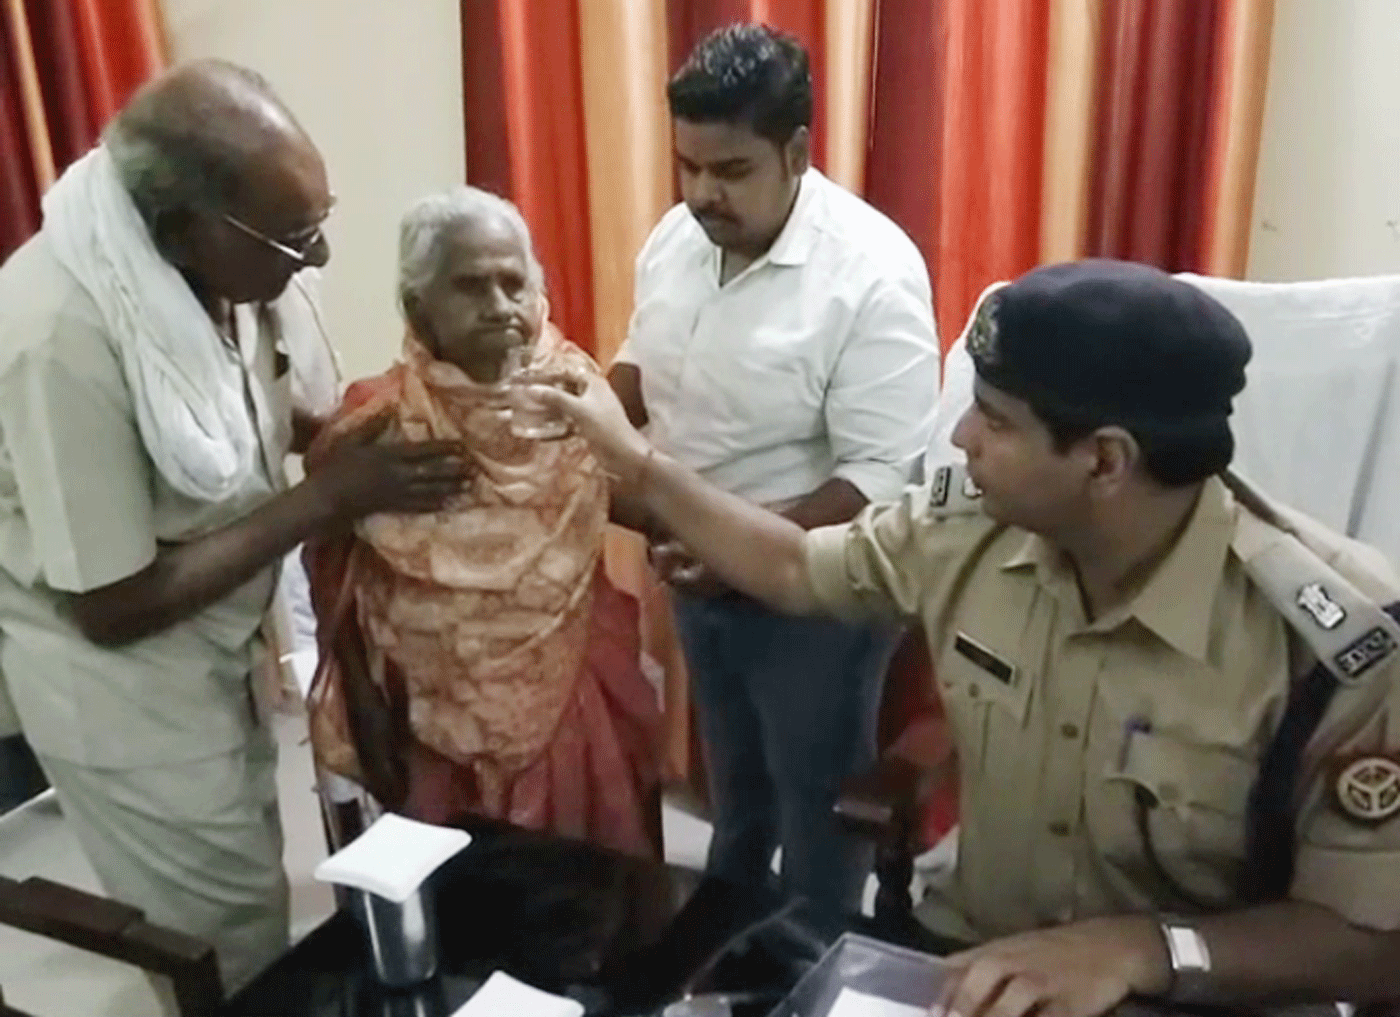 SP Rural Sanjay Kumar Good work helped old lady